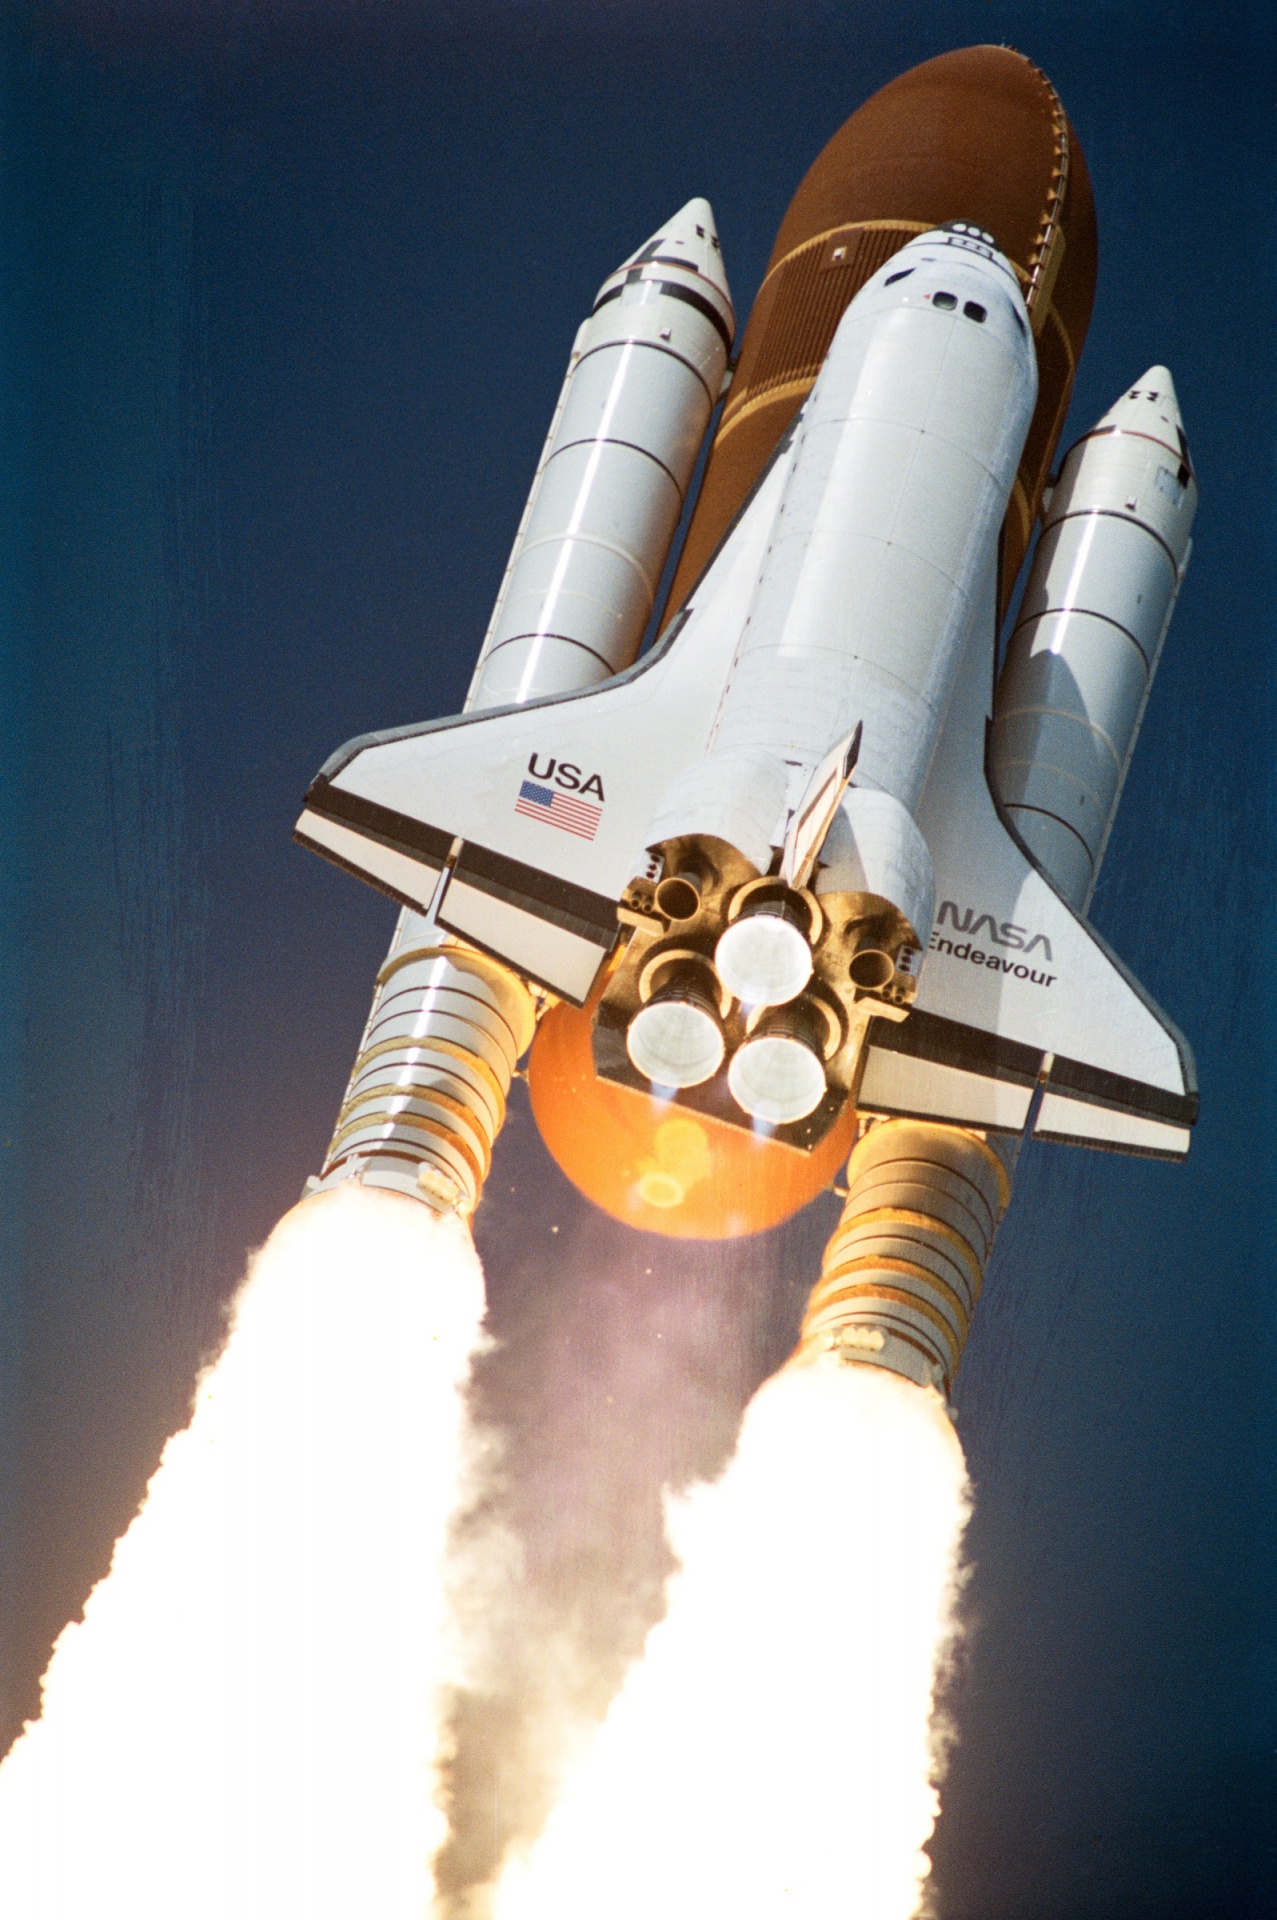 space shuttle endeavour space shuttle